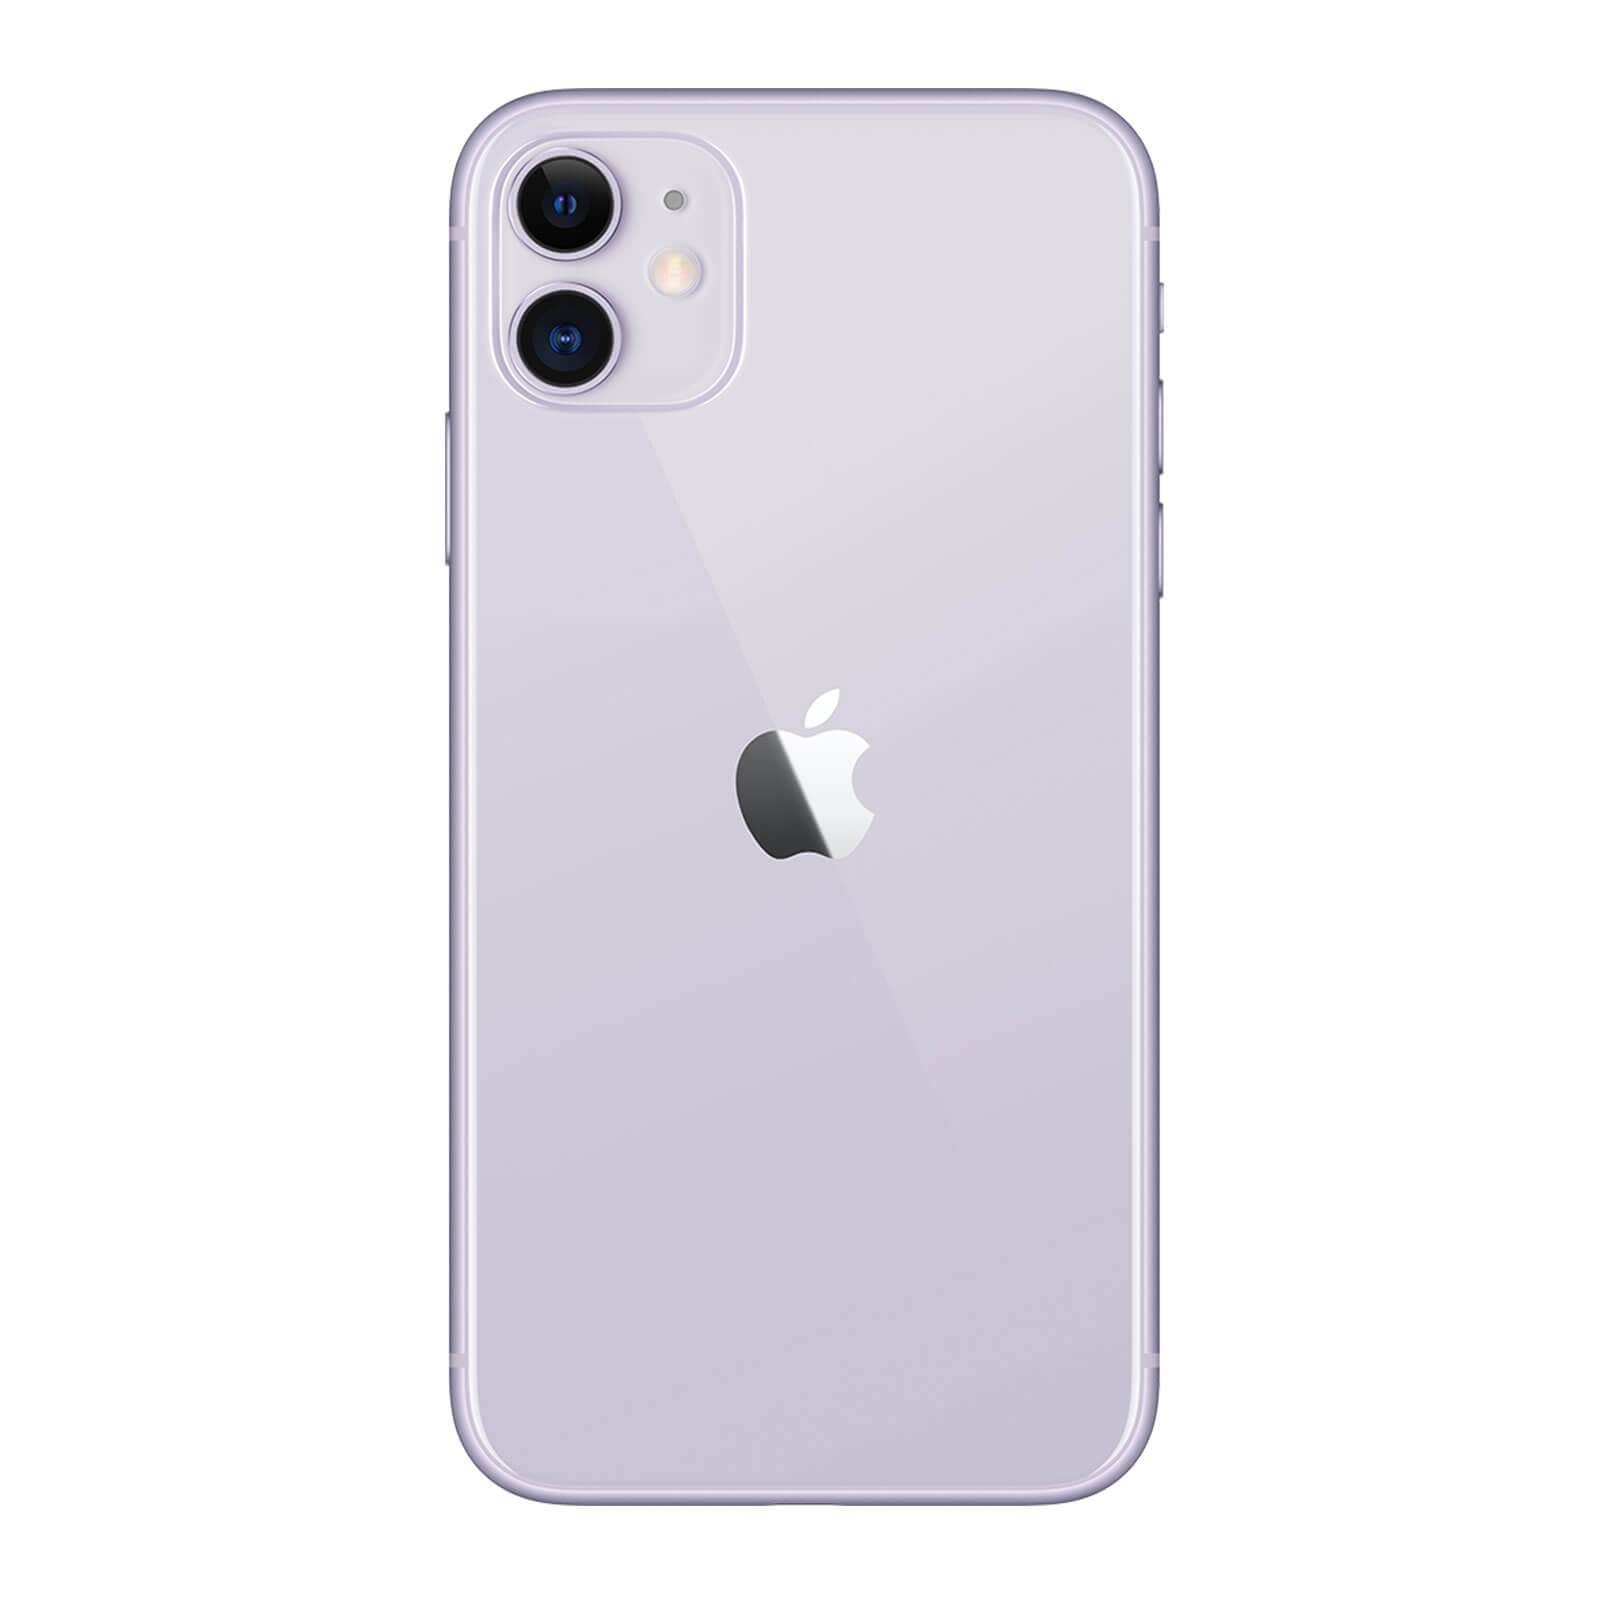 Apple iPhone 11 128GB Purple Very Good - Unlocked